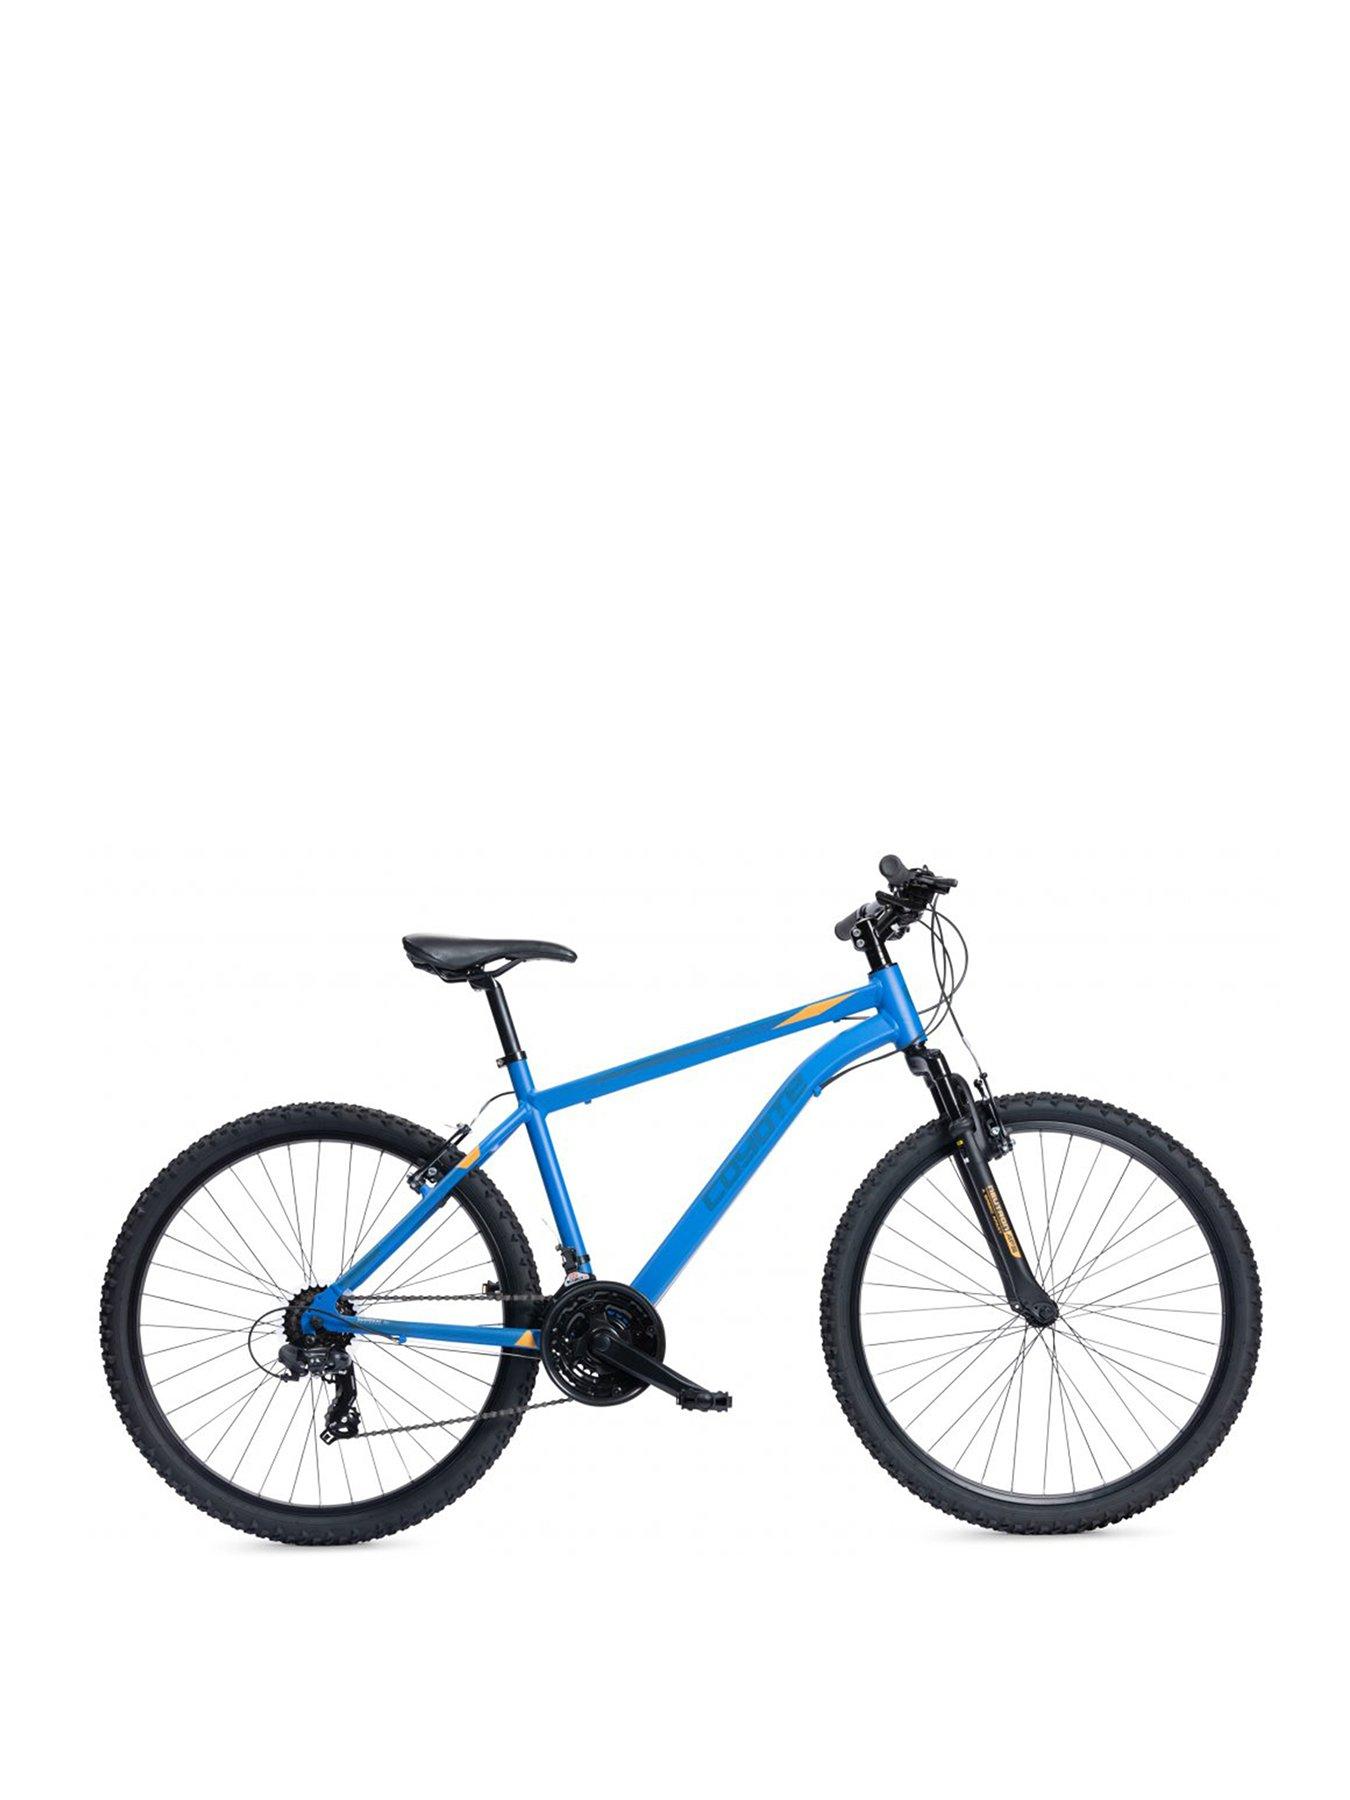 mens mountain bike 22 inch frame